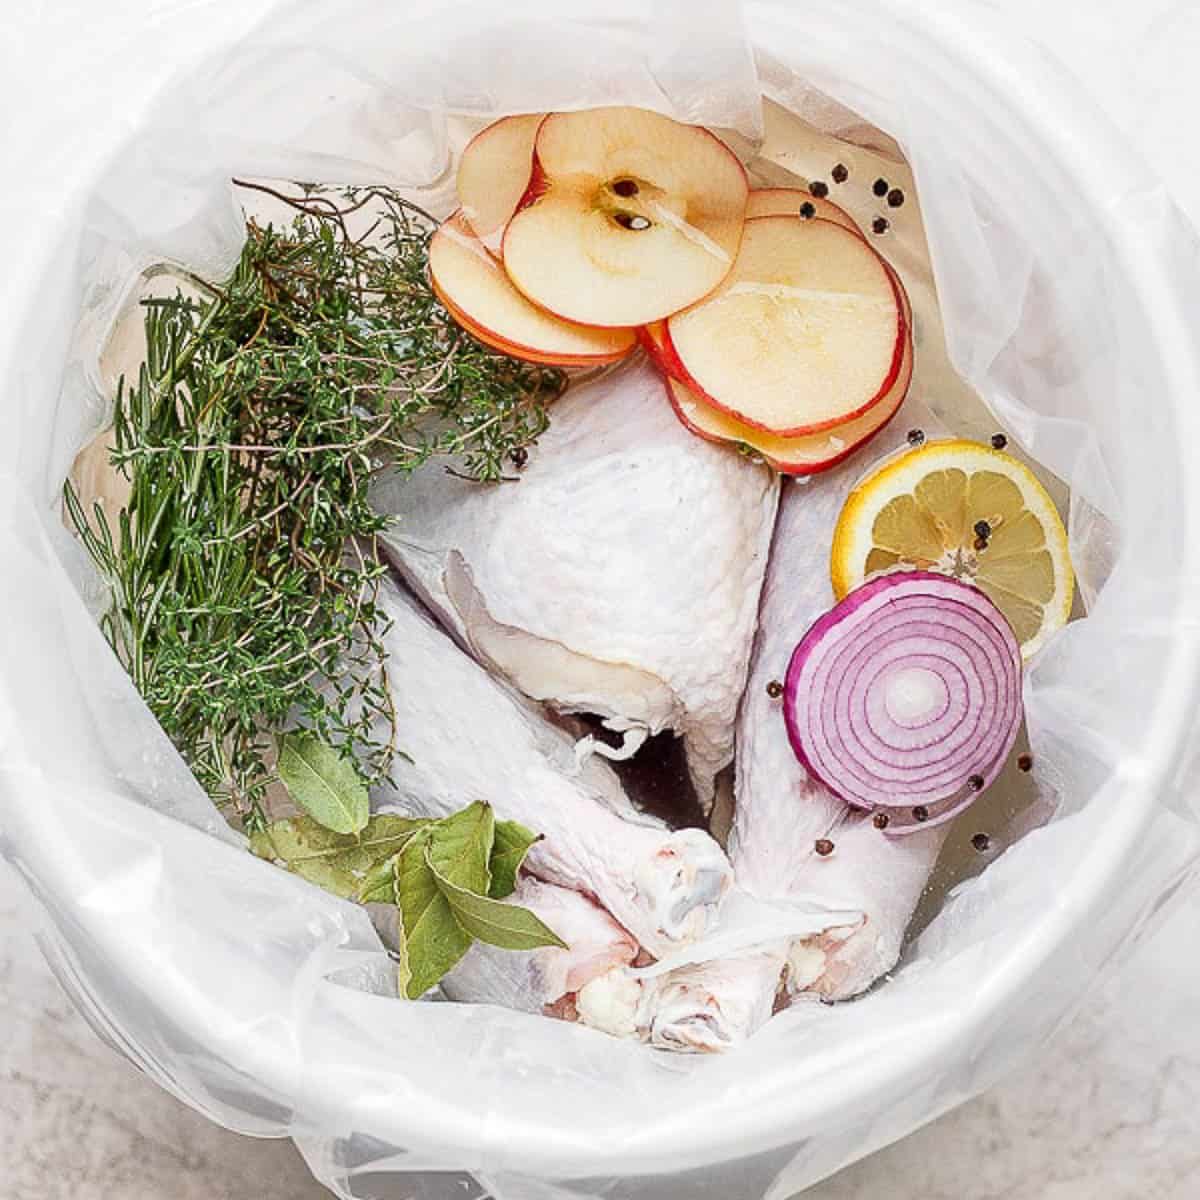 https://thewoodenskillet.com/wp-content/uploads/2019/11/turkey-brine-recipe-1.jpg